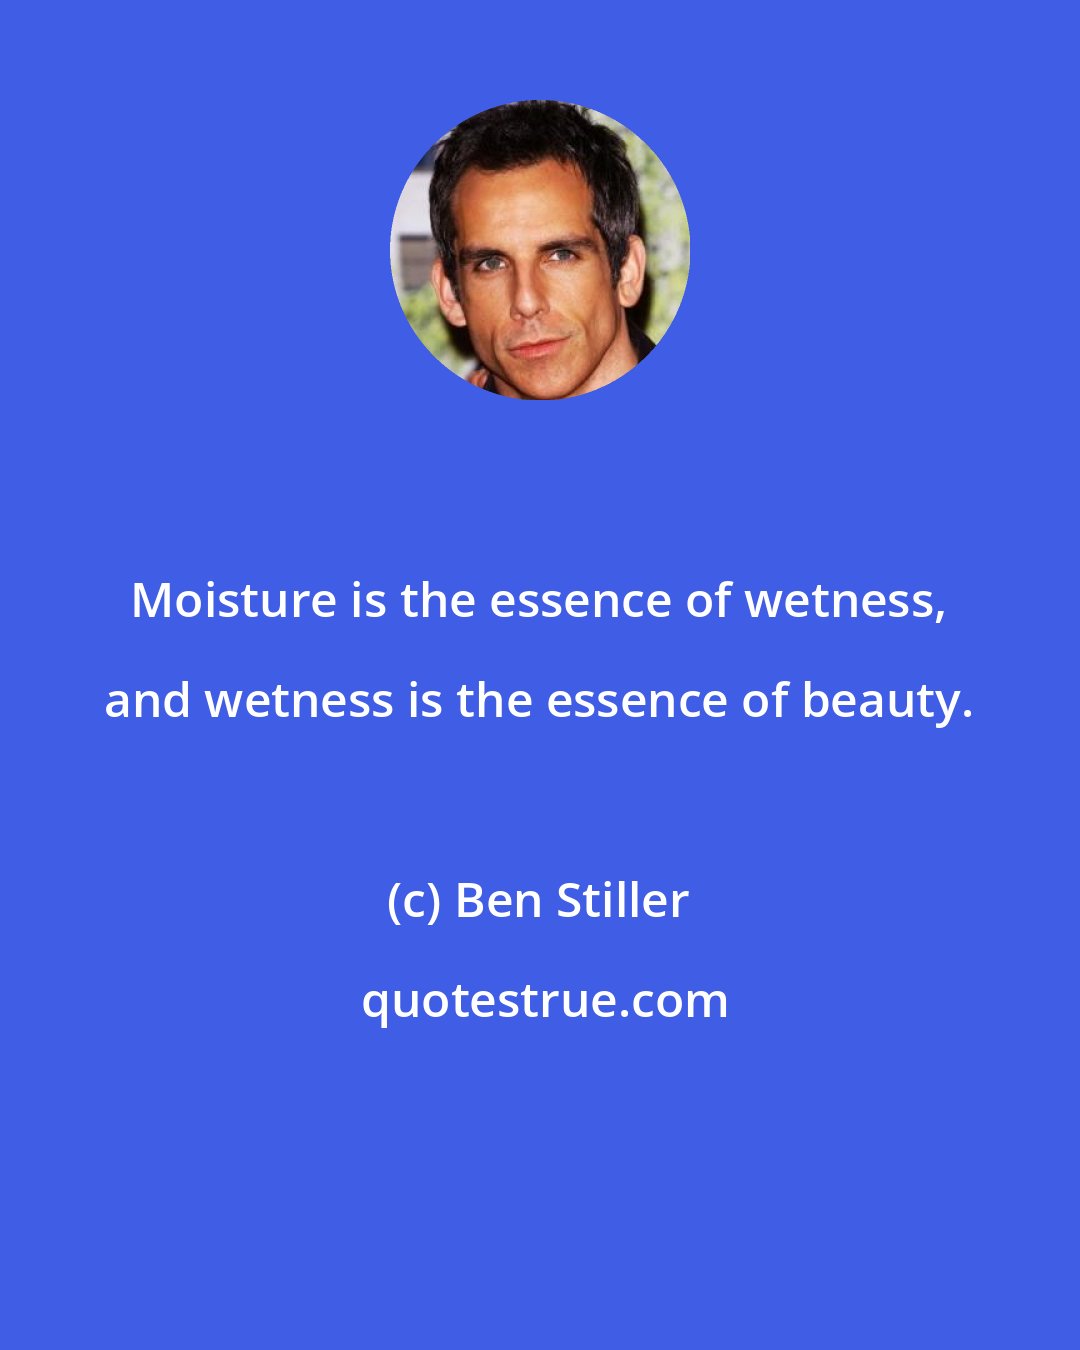 Ben Stiller: Moisture is the essence of wetness, and wetness is the essence of beauty.